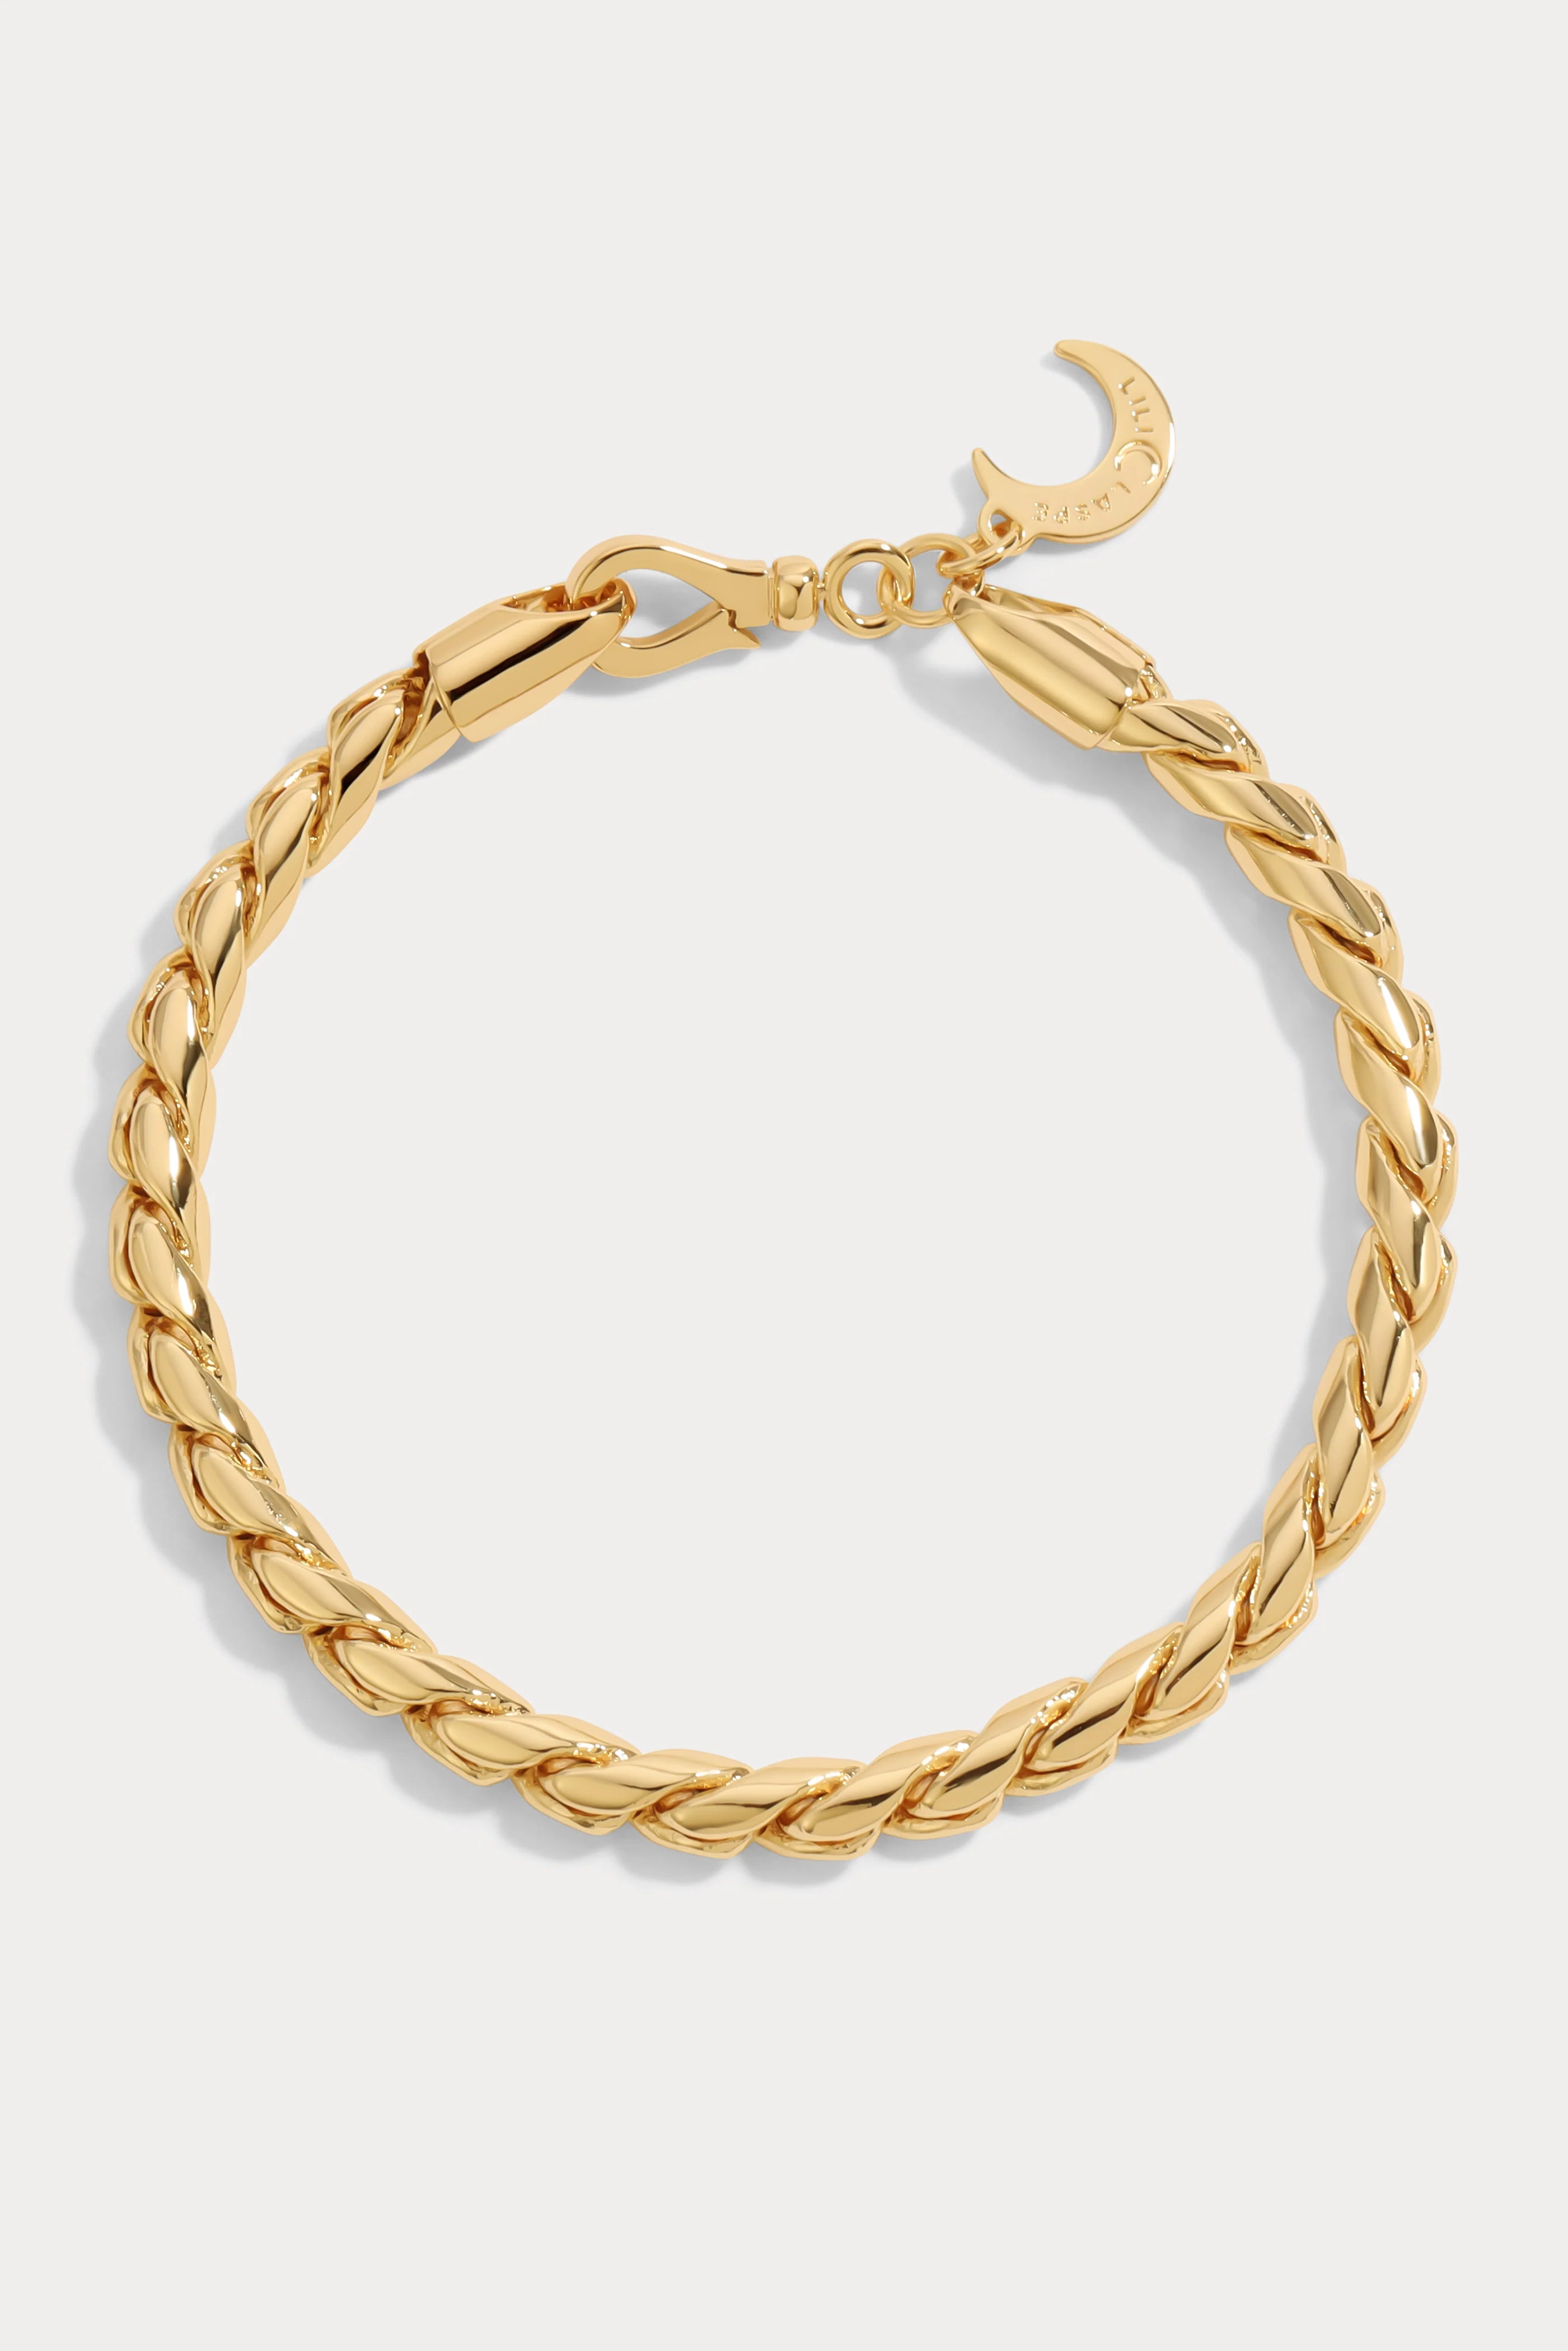 Lili Claspe Large Bruna Bracelet - Gold